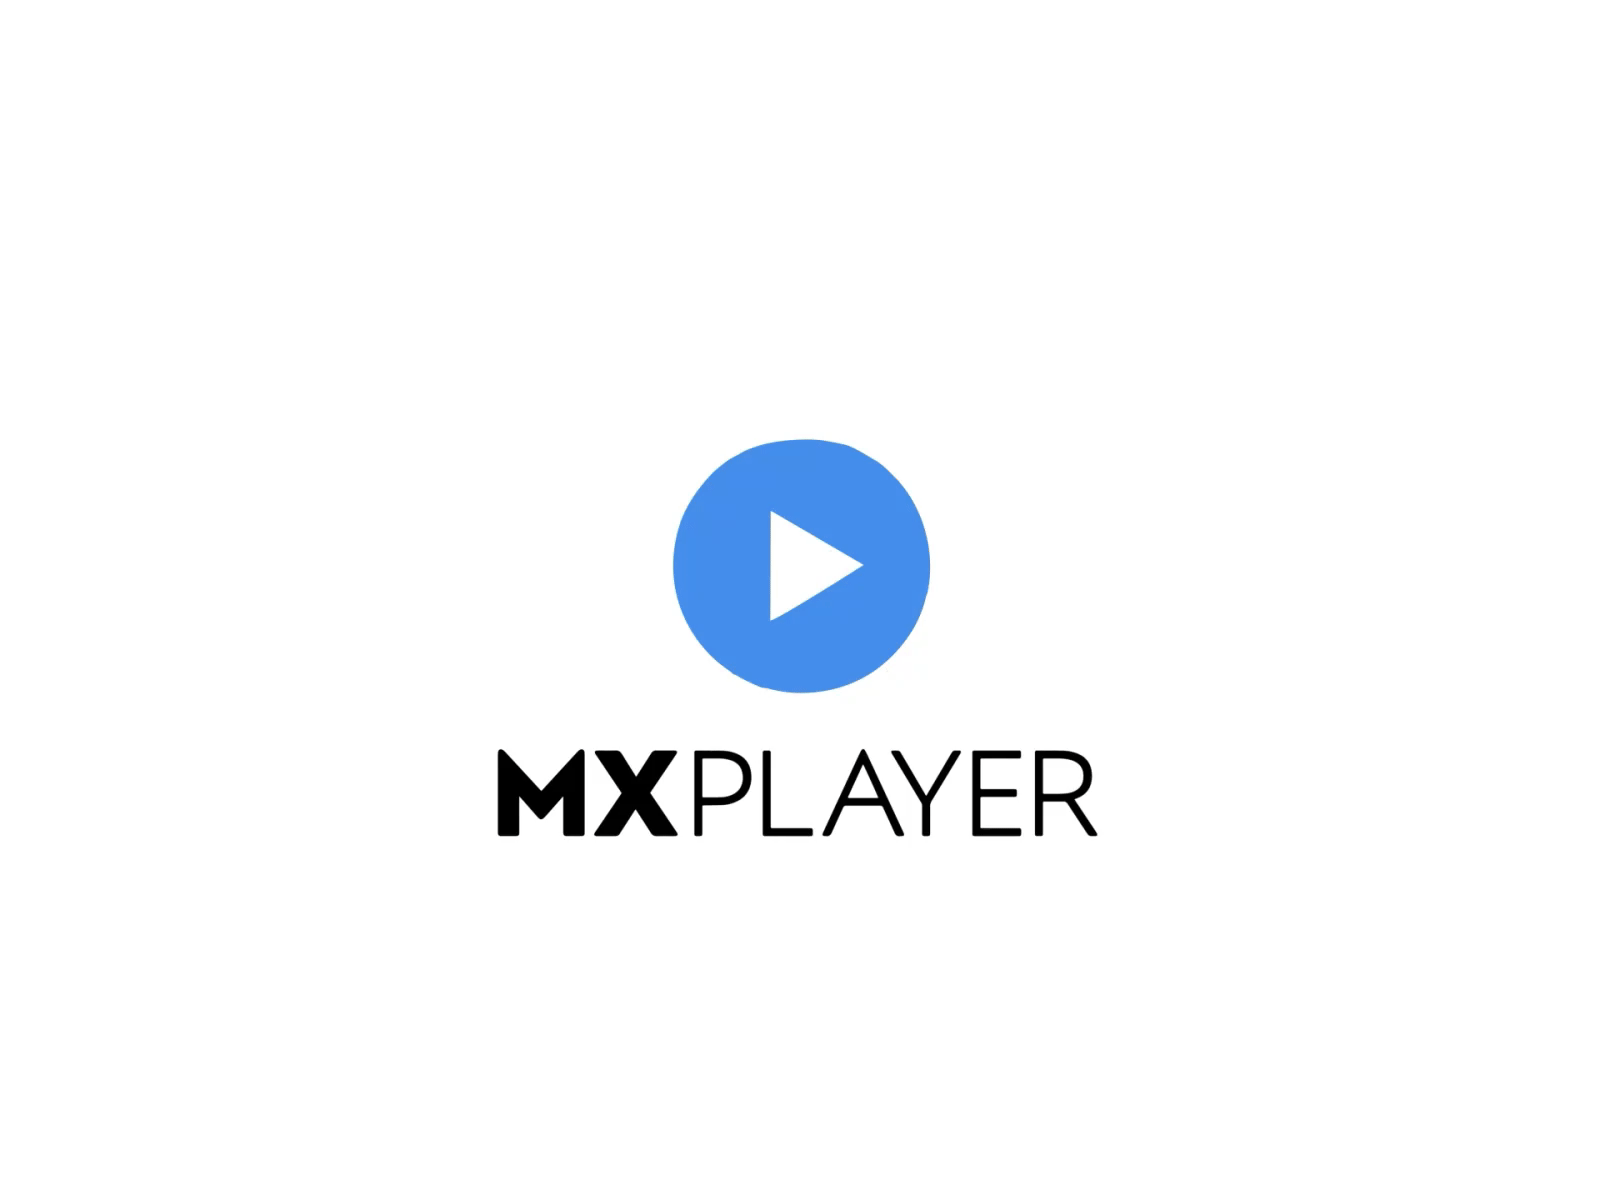 Mx Player Logo Animation